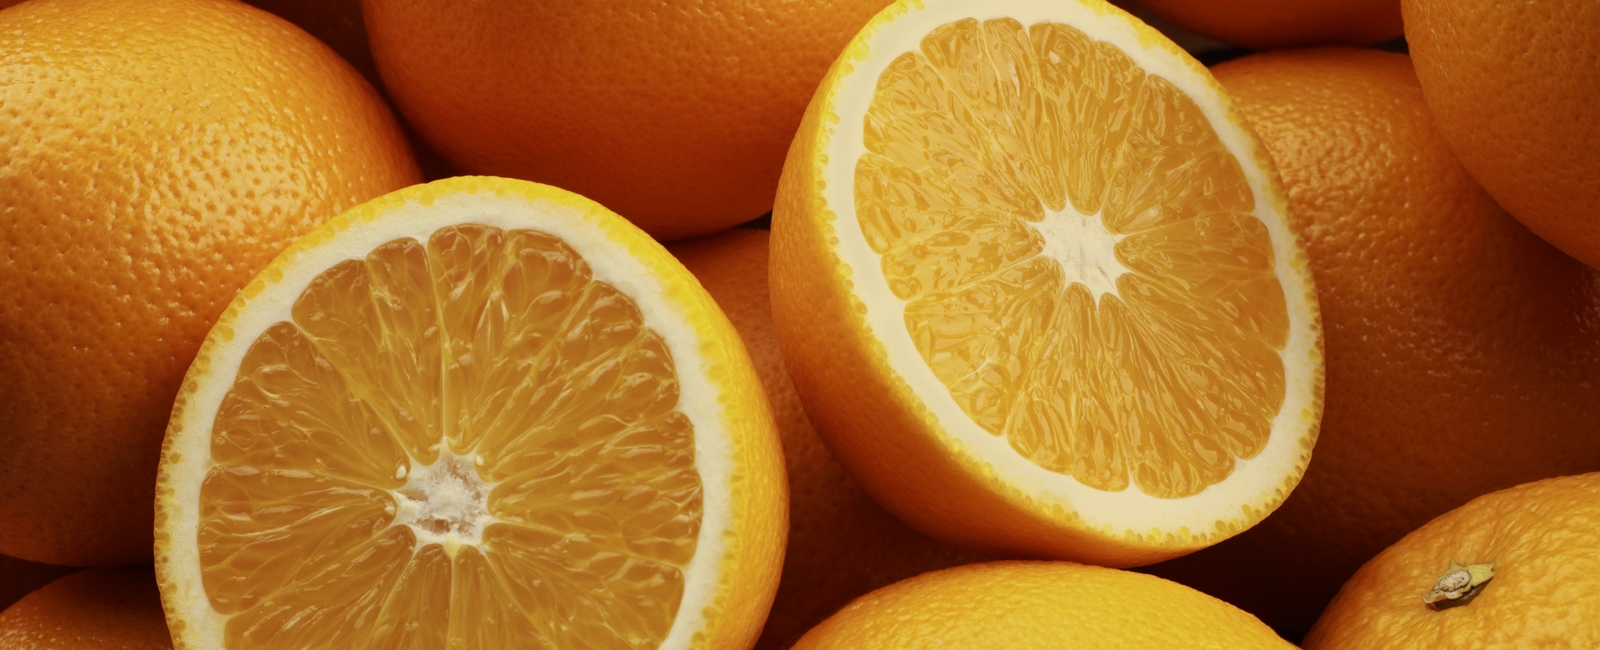 Role of Nitrogen in Citrus Production